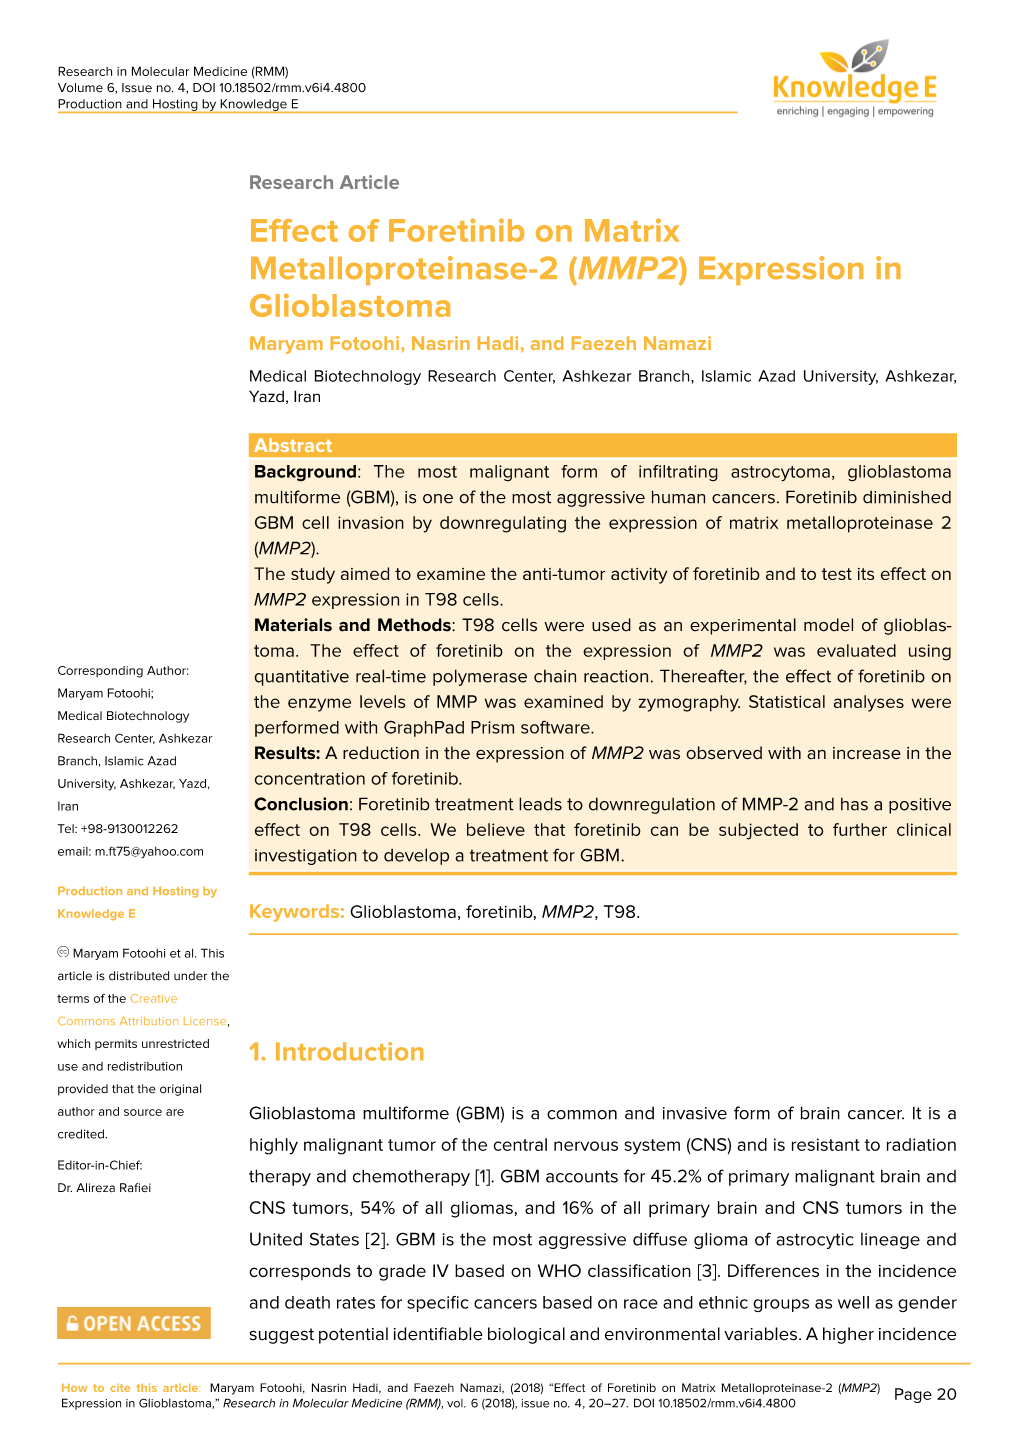 Effect of Foretinib on Matrix Metalloproteinase-2 (MMP2) Page 20 Expression in Glioblastoma,” Research in Molecular Medicine (RMM), Vol